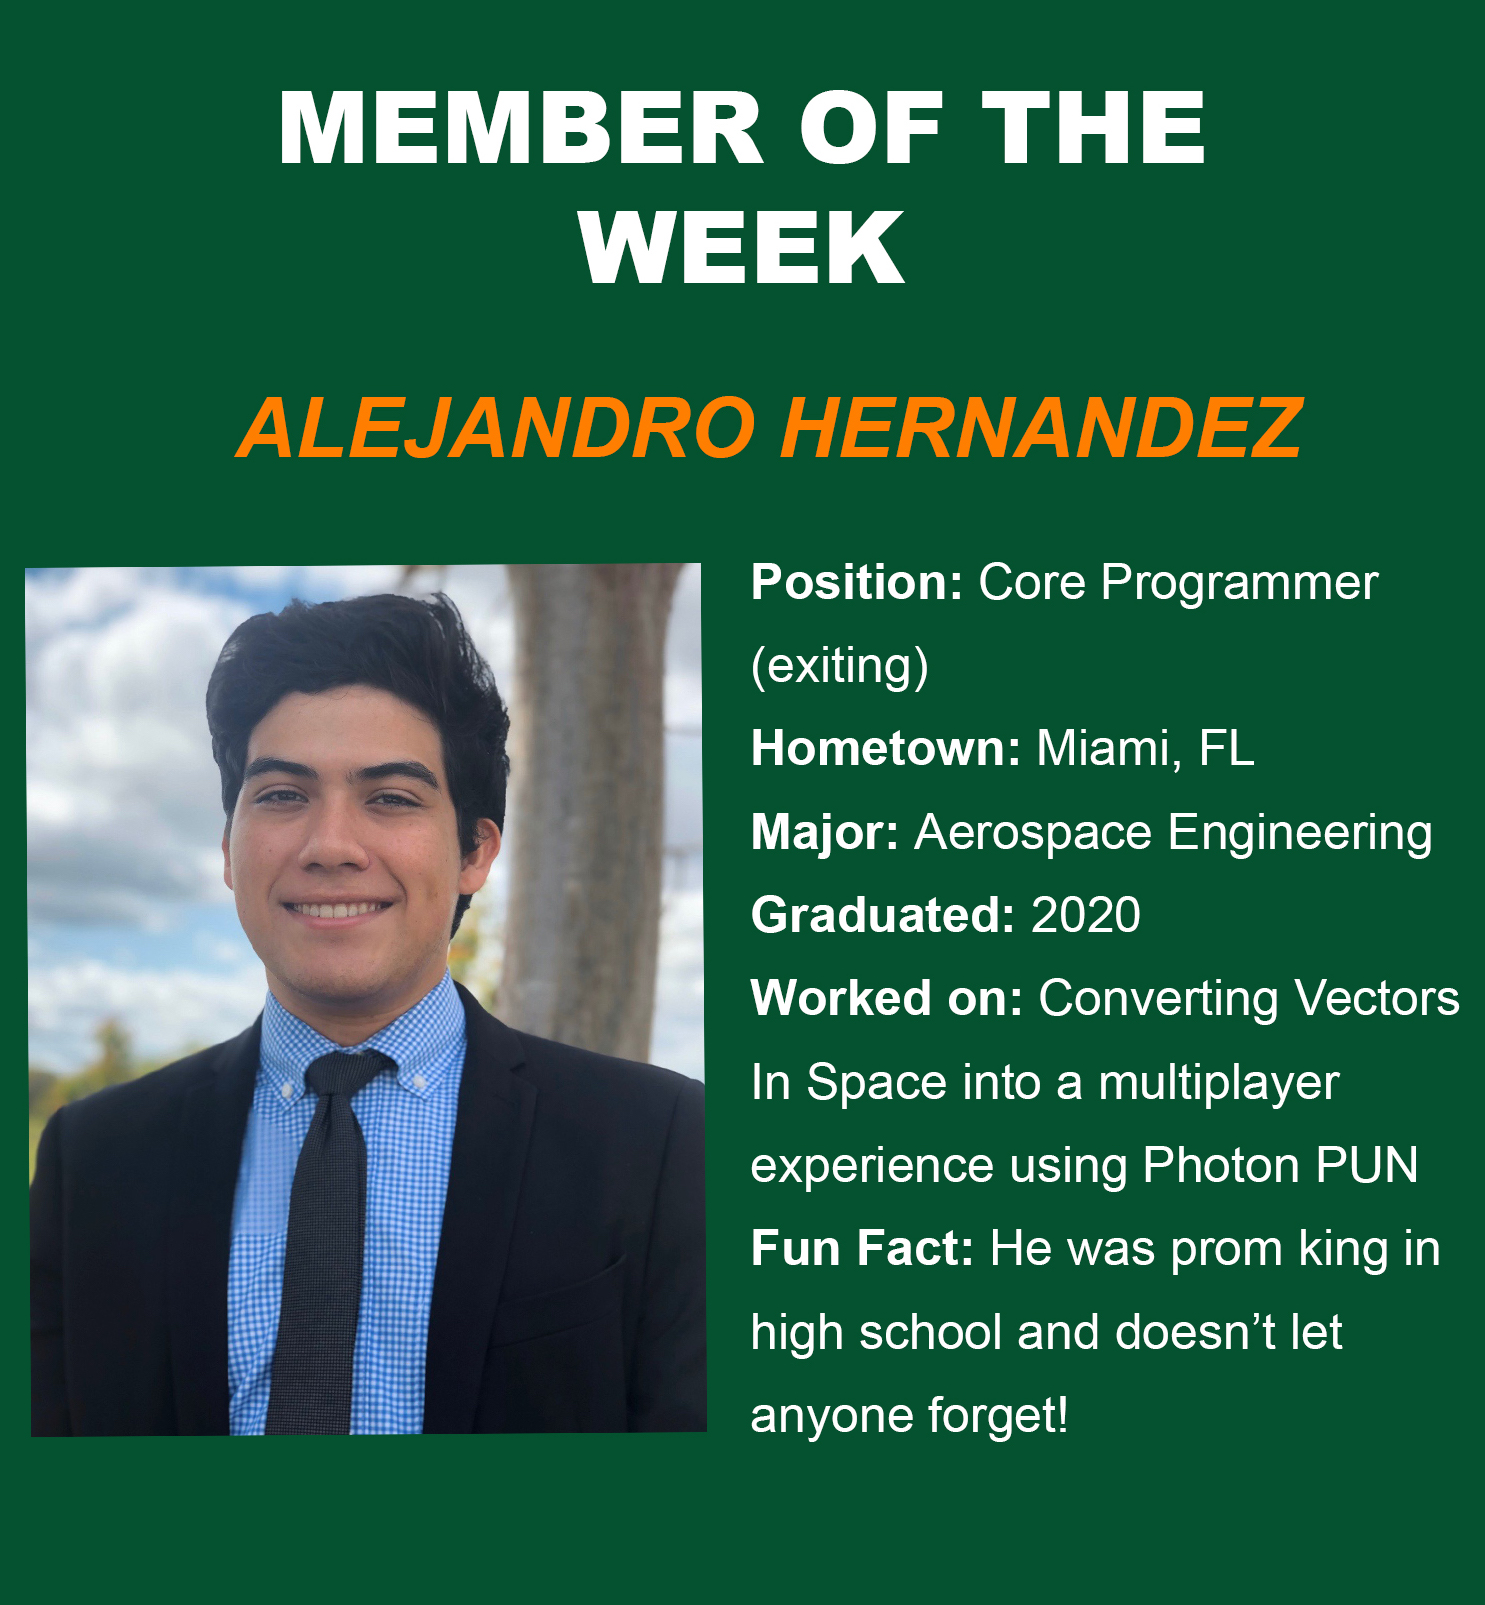 alejandro, member of the week